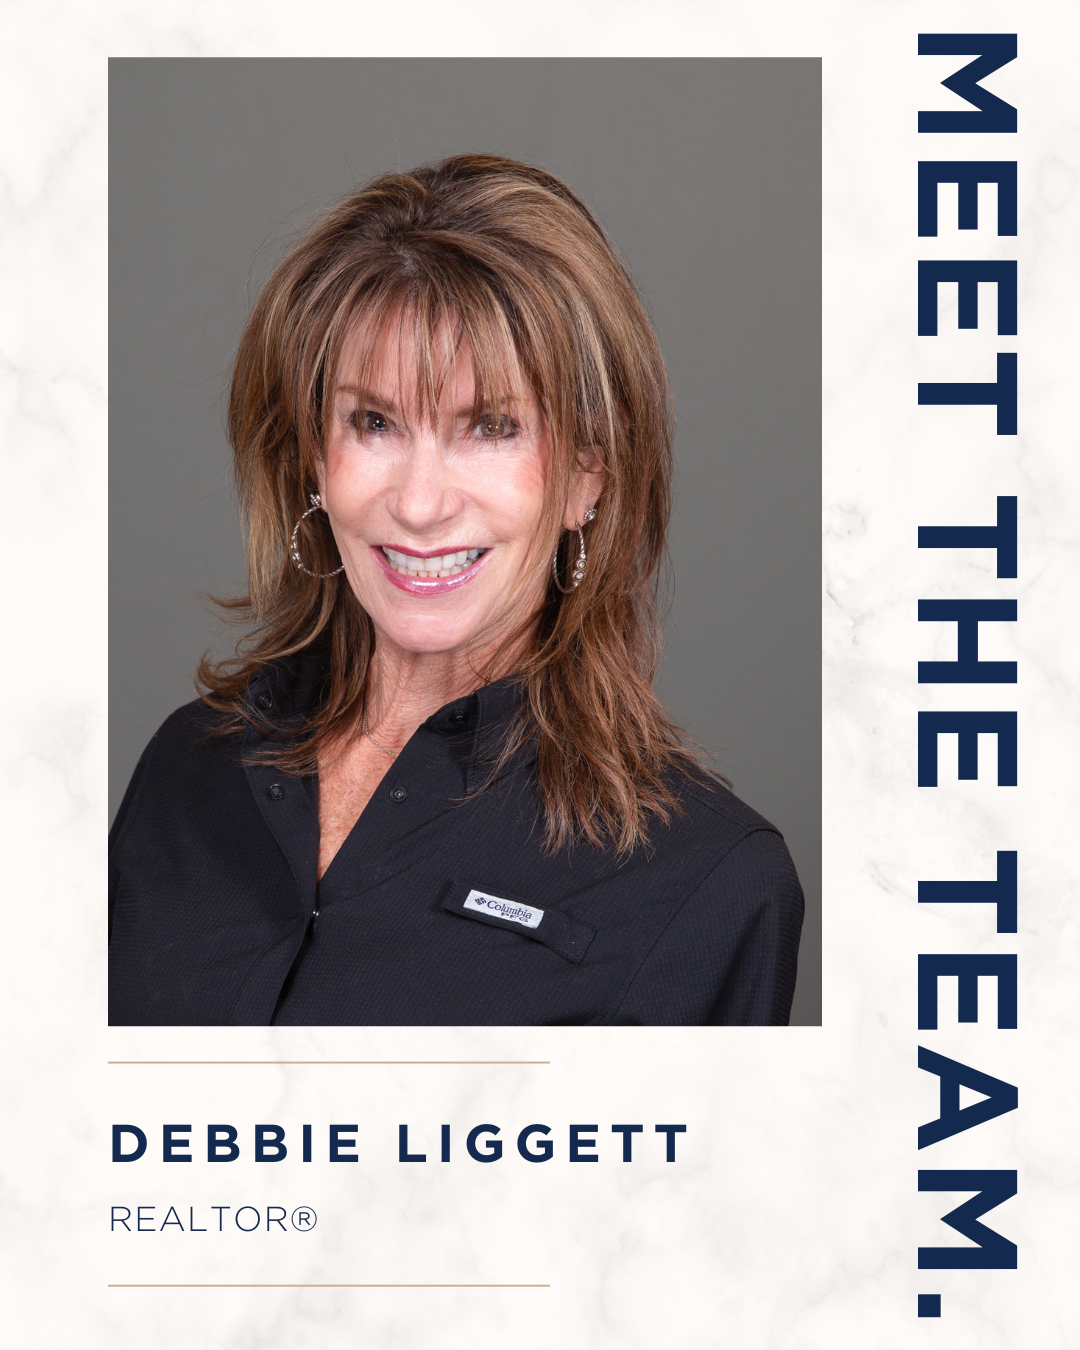 Meet the Team: Debbie Liggett